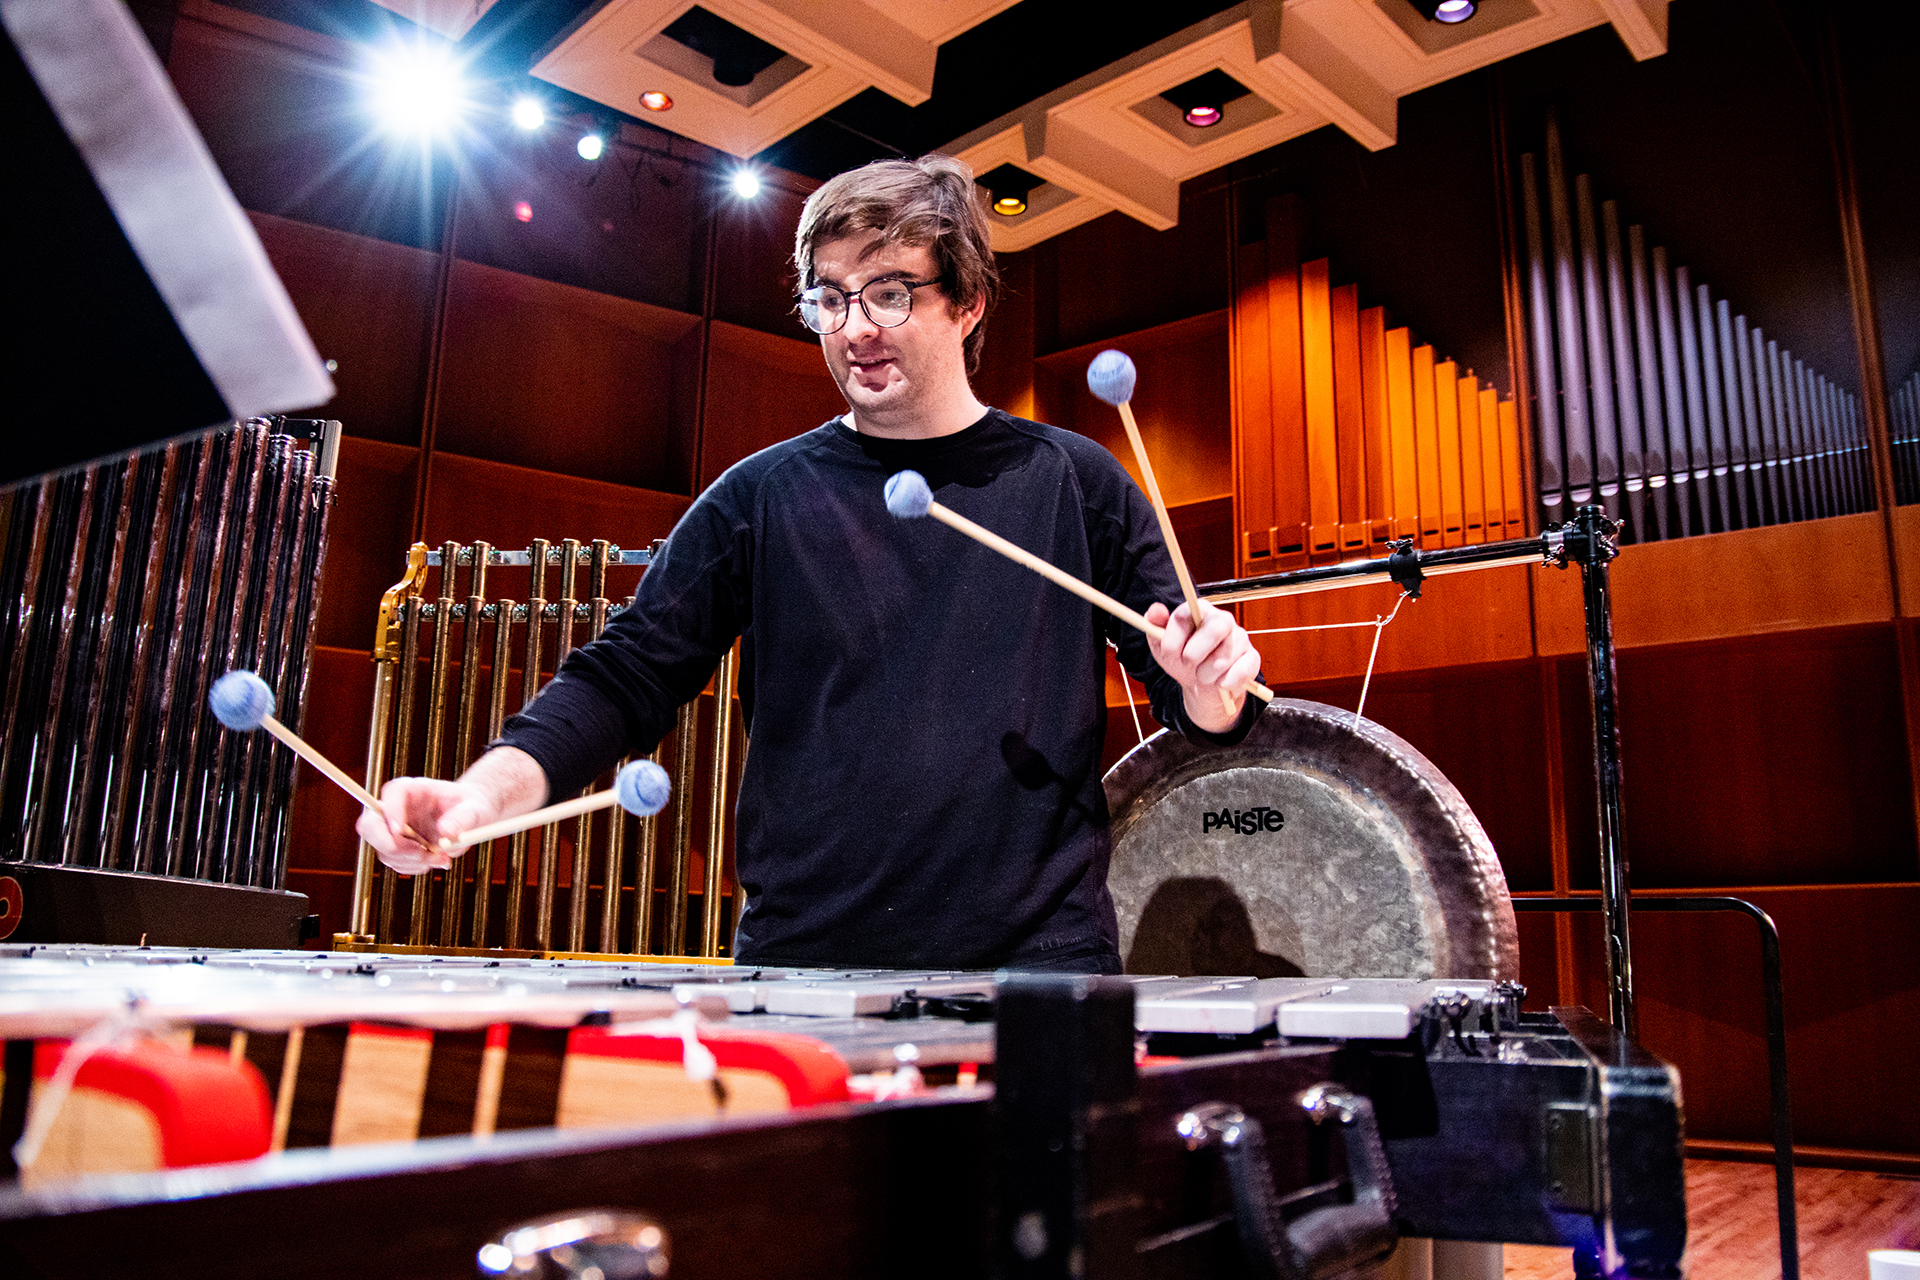 Sean Dowgray, UAF Percussion Instructor, plays in the UAF Davis Concert Hall. Photo by Scott Hansen.